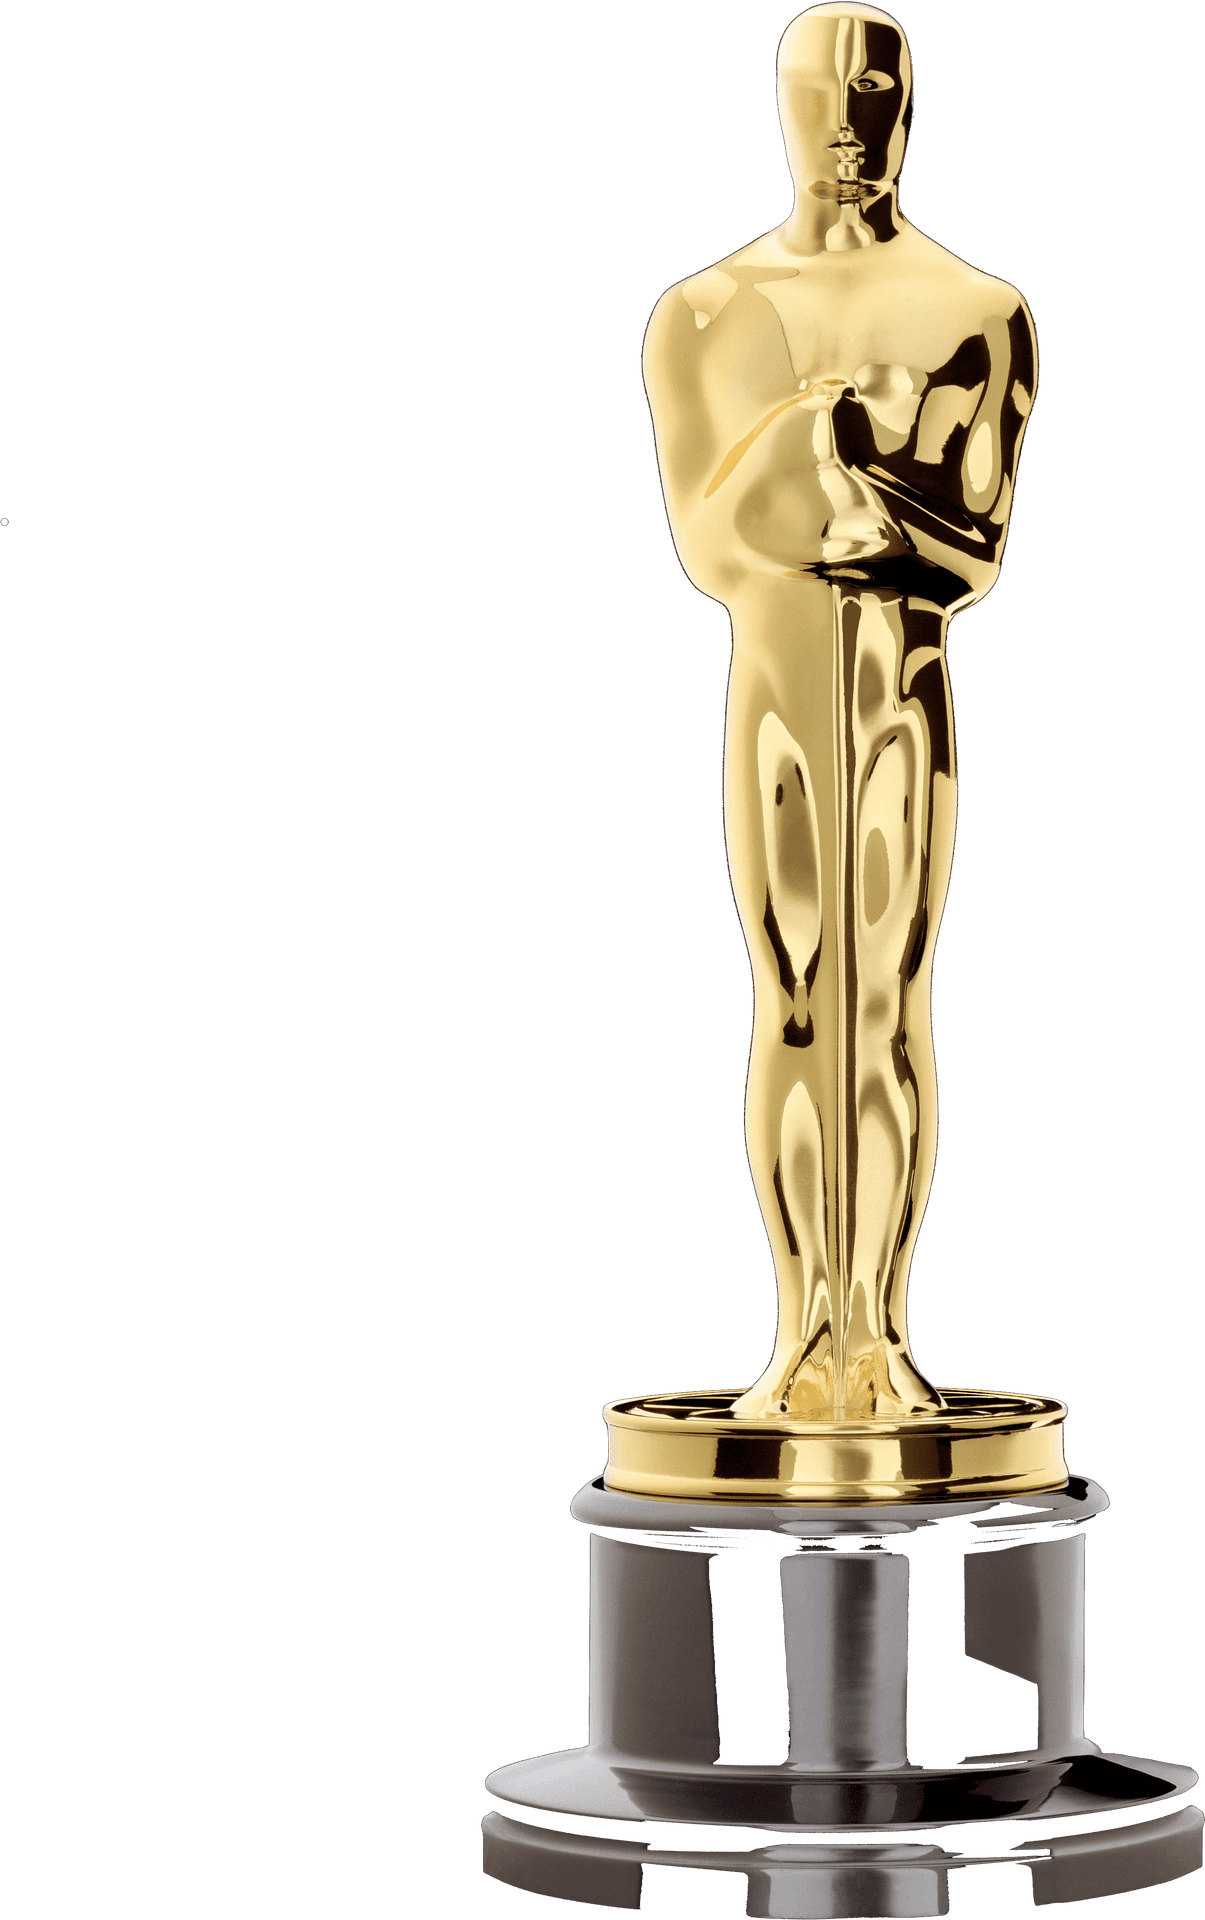 Golden Award Statue Trophy PNG